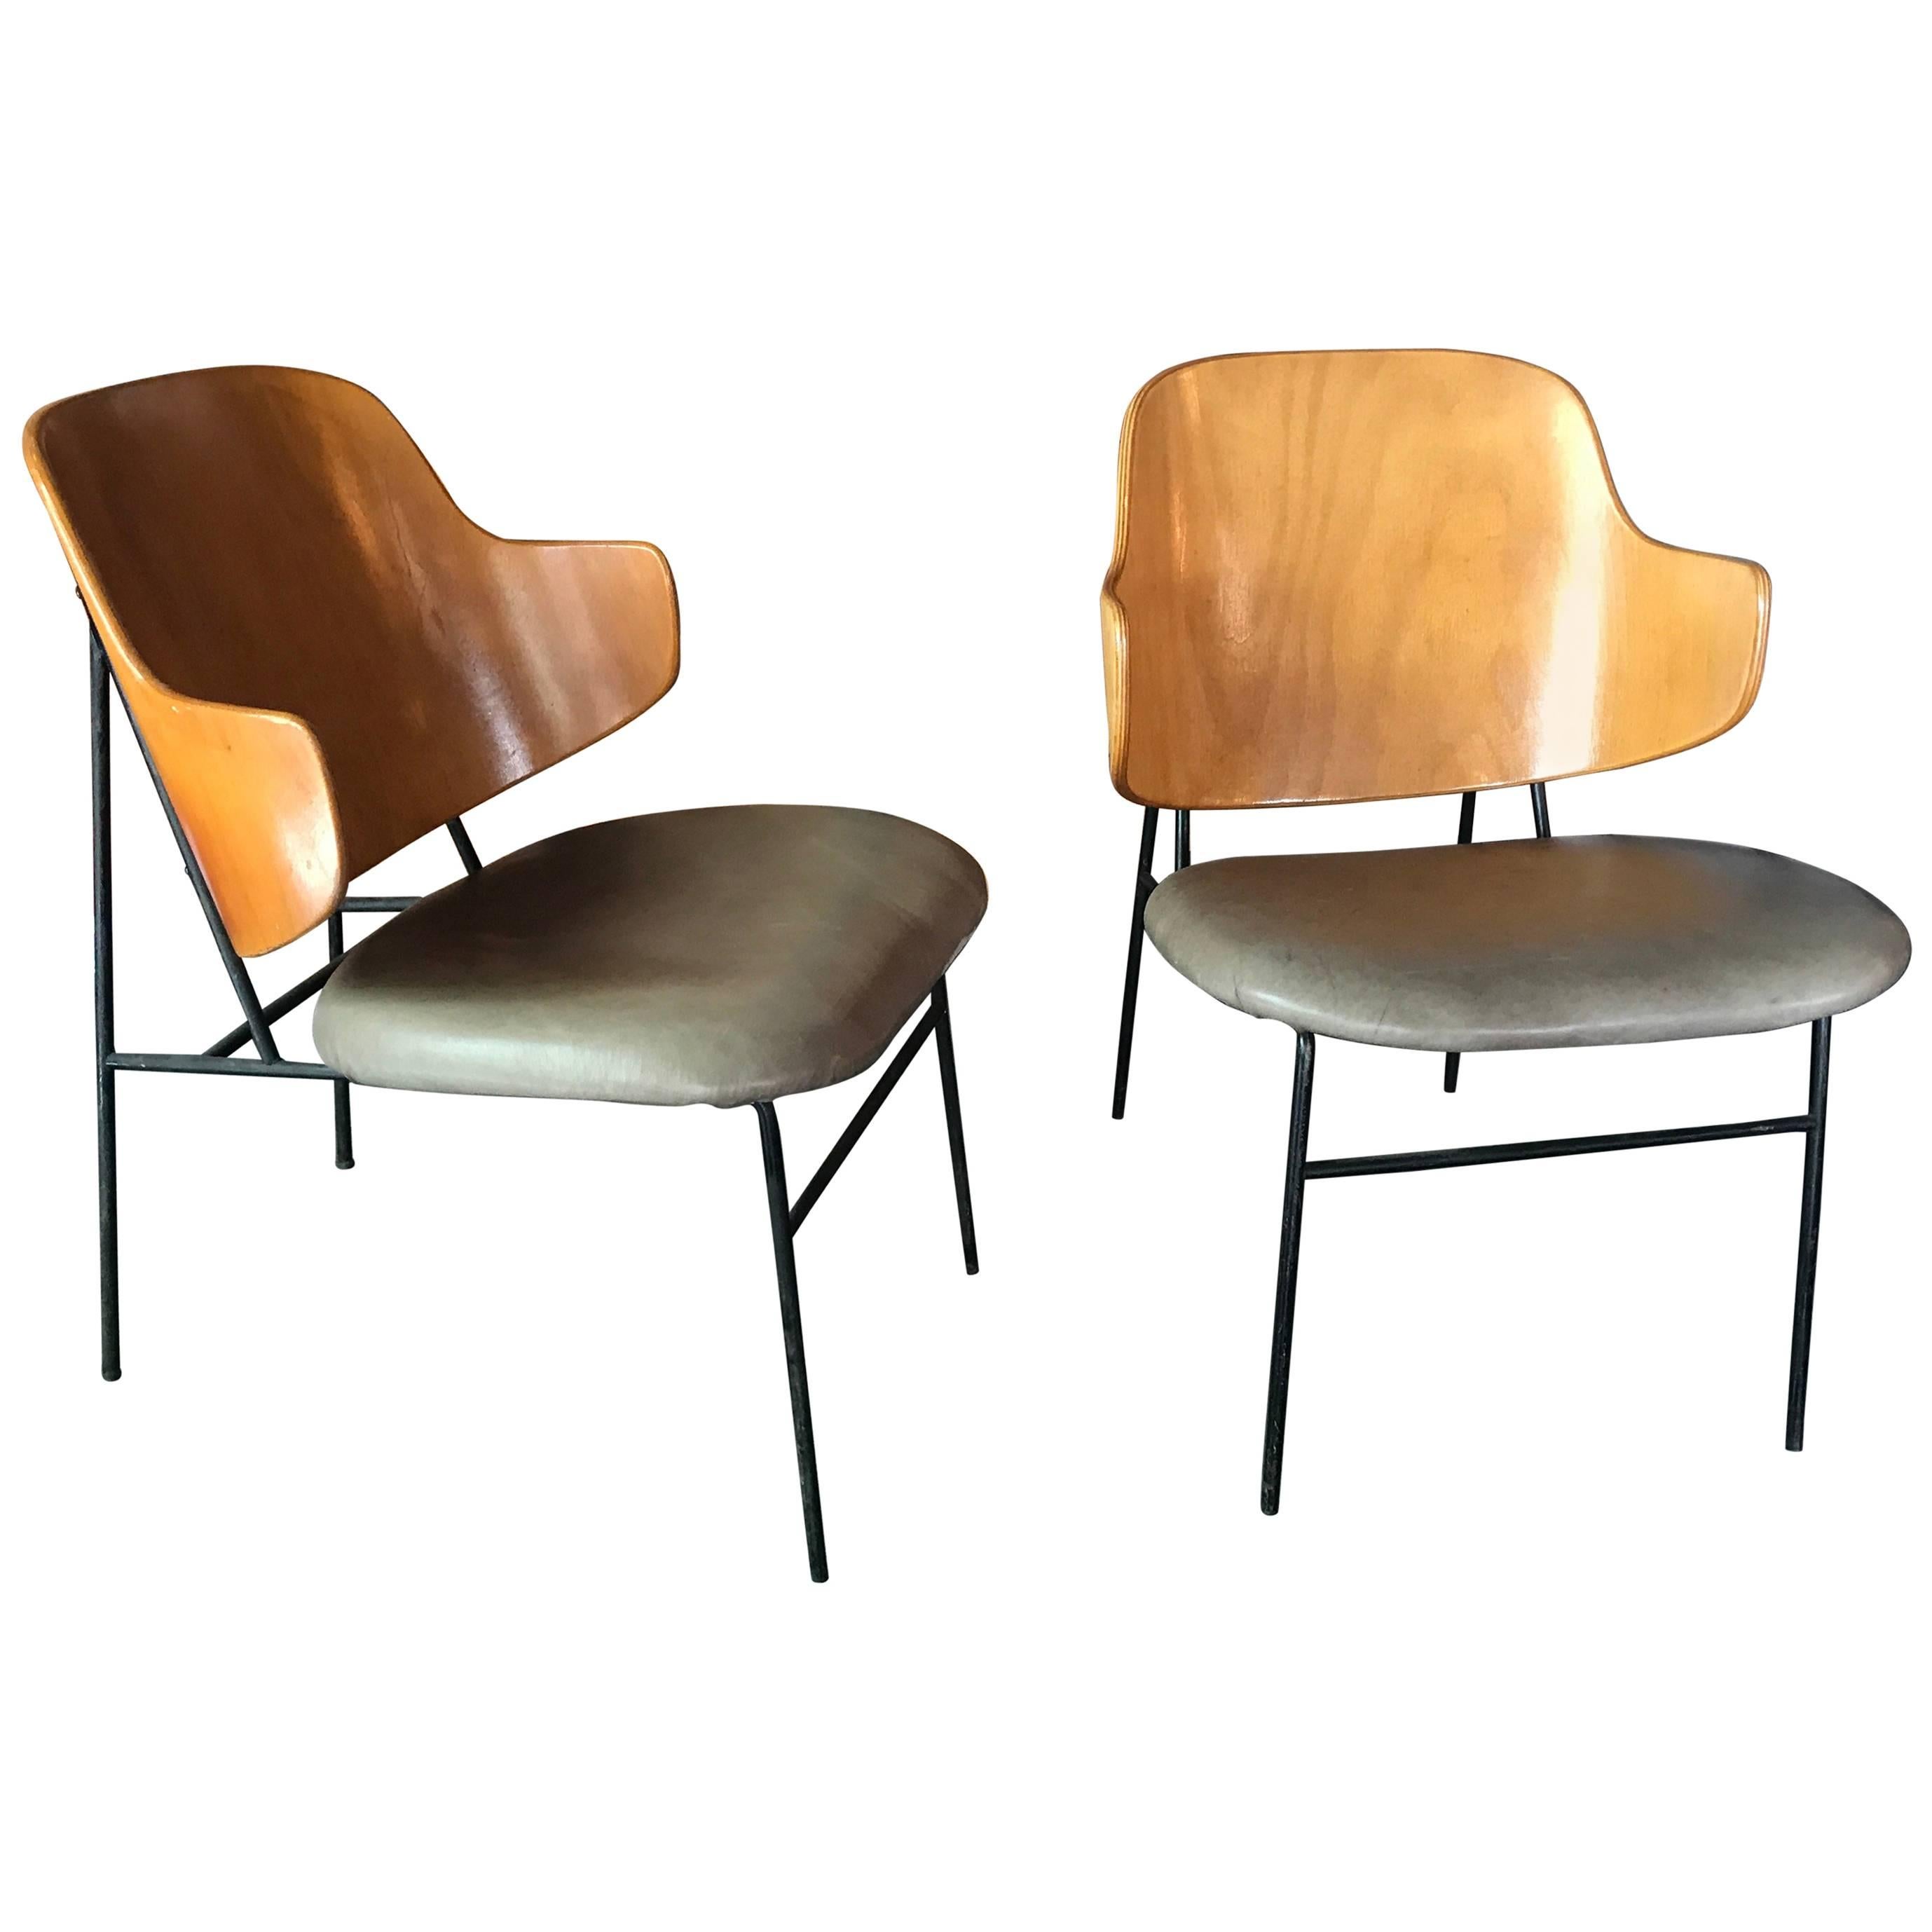 Pair of Ib Kofod-Larsen "Penguin" Danish Lounge Chairs with Leather Seats